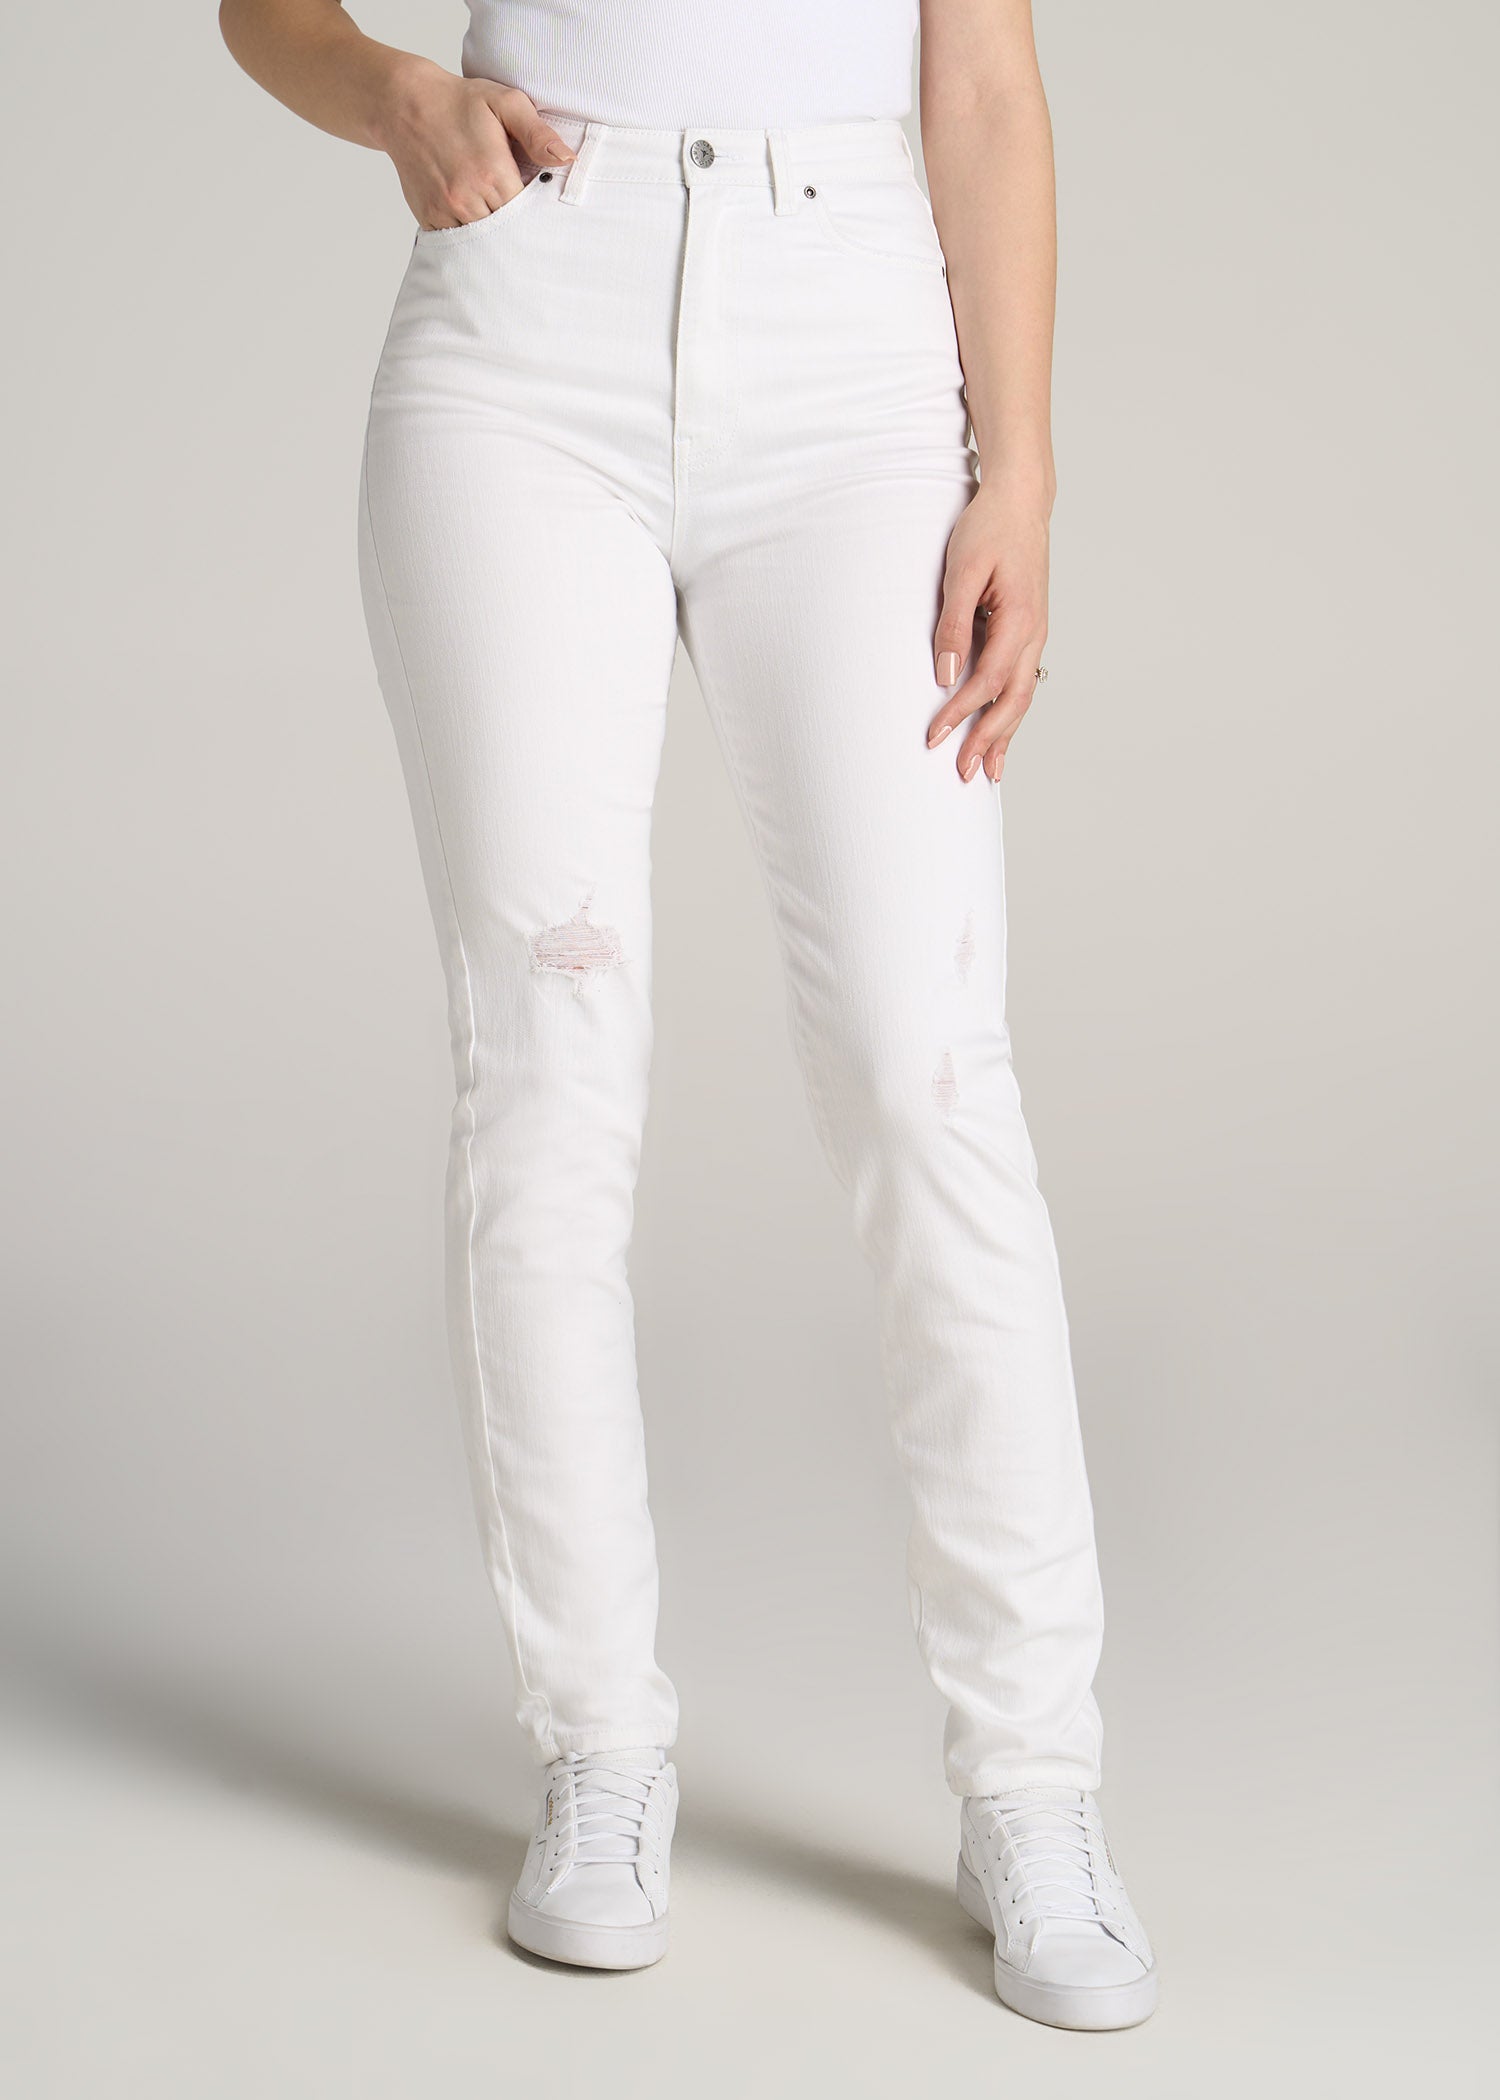 Women's Tall White Jeans Lola Ultra High Rise Slim – American Tall